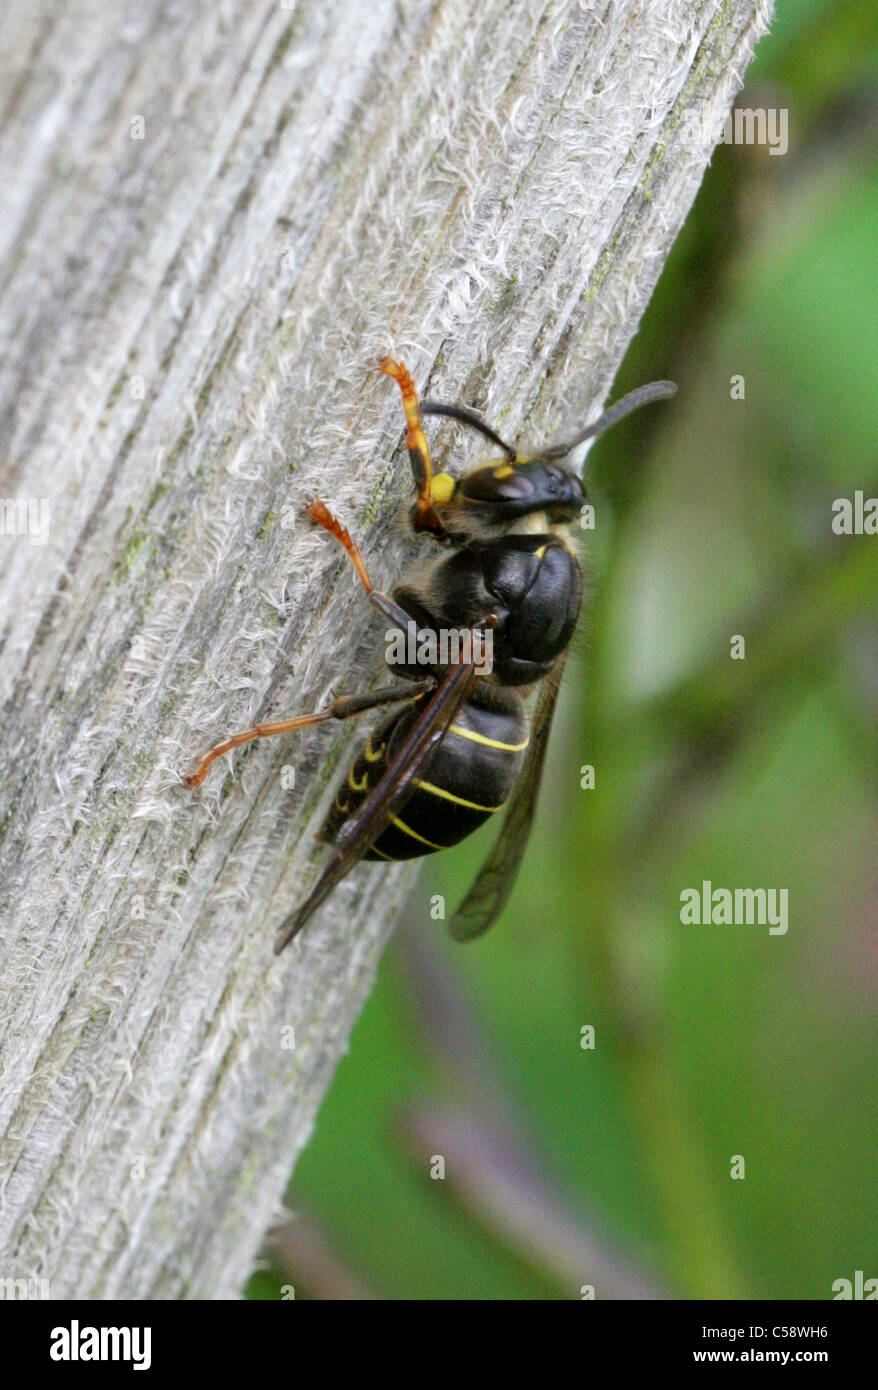 Median Wasp, Dolichovespula media, Vespinae, Vespidae, Apocrita, Hymenoptera. Scraping Wood Shavings of a Post for Nest Material Stock Photo